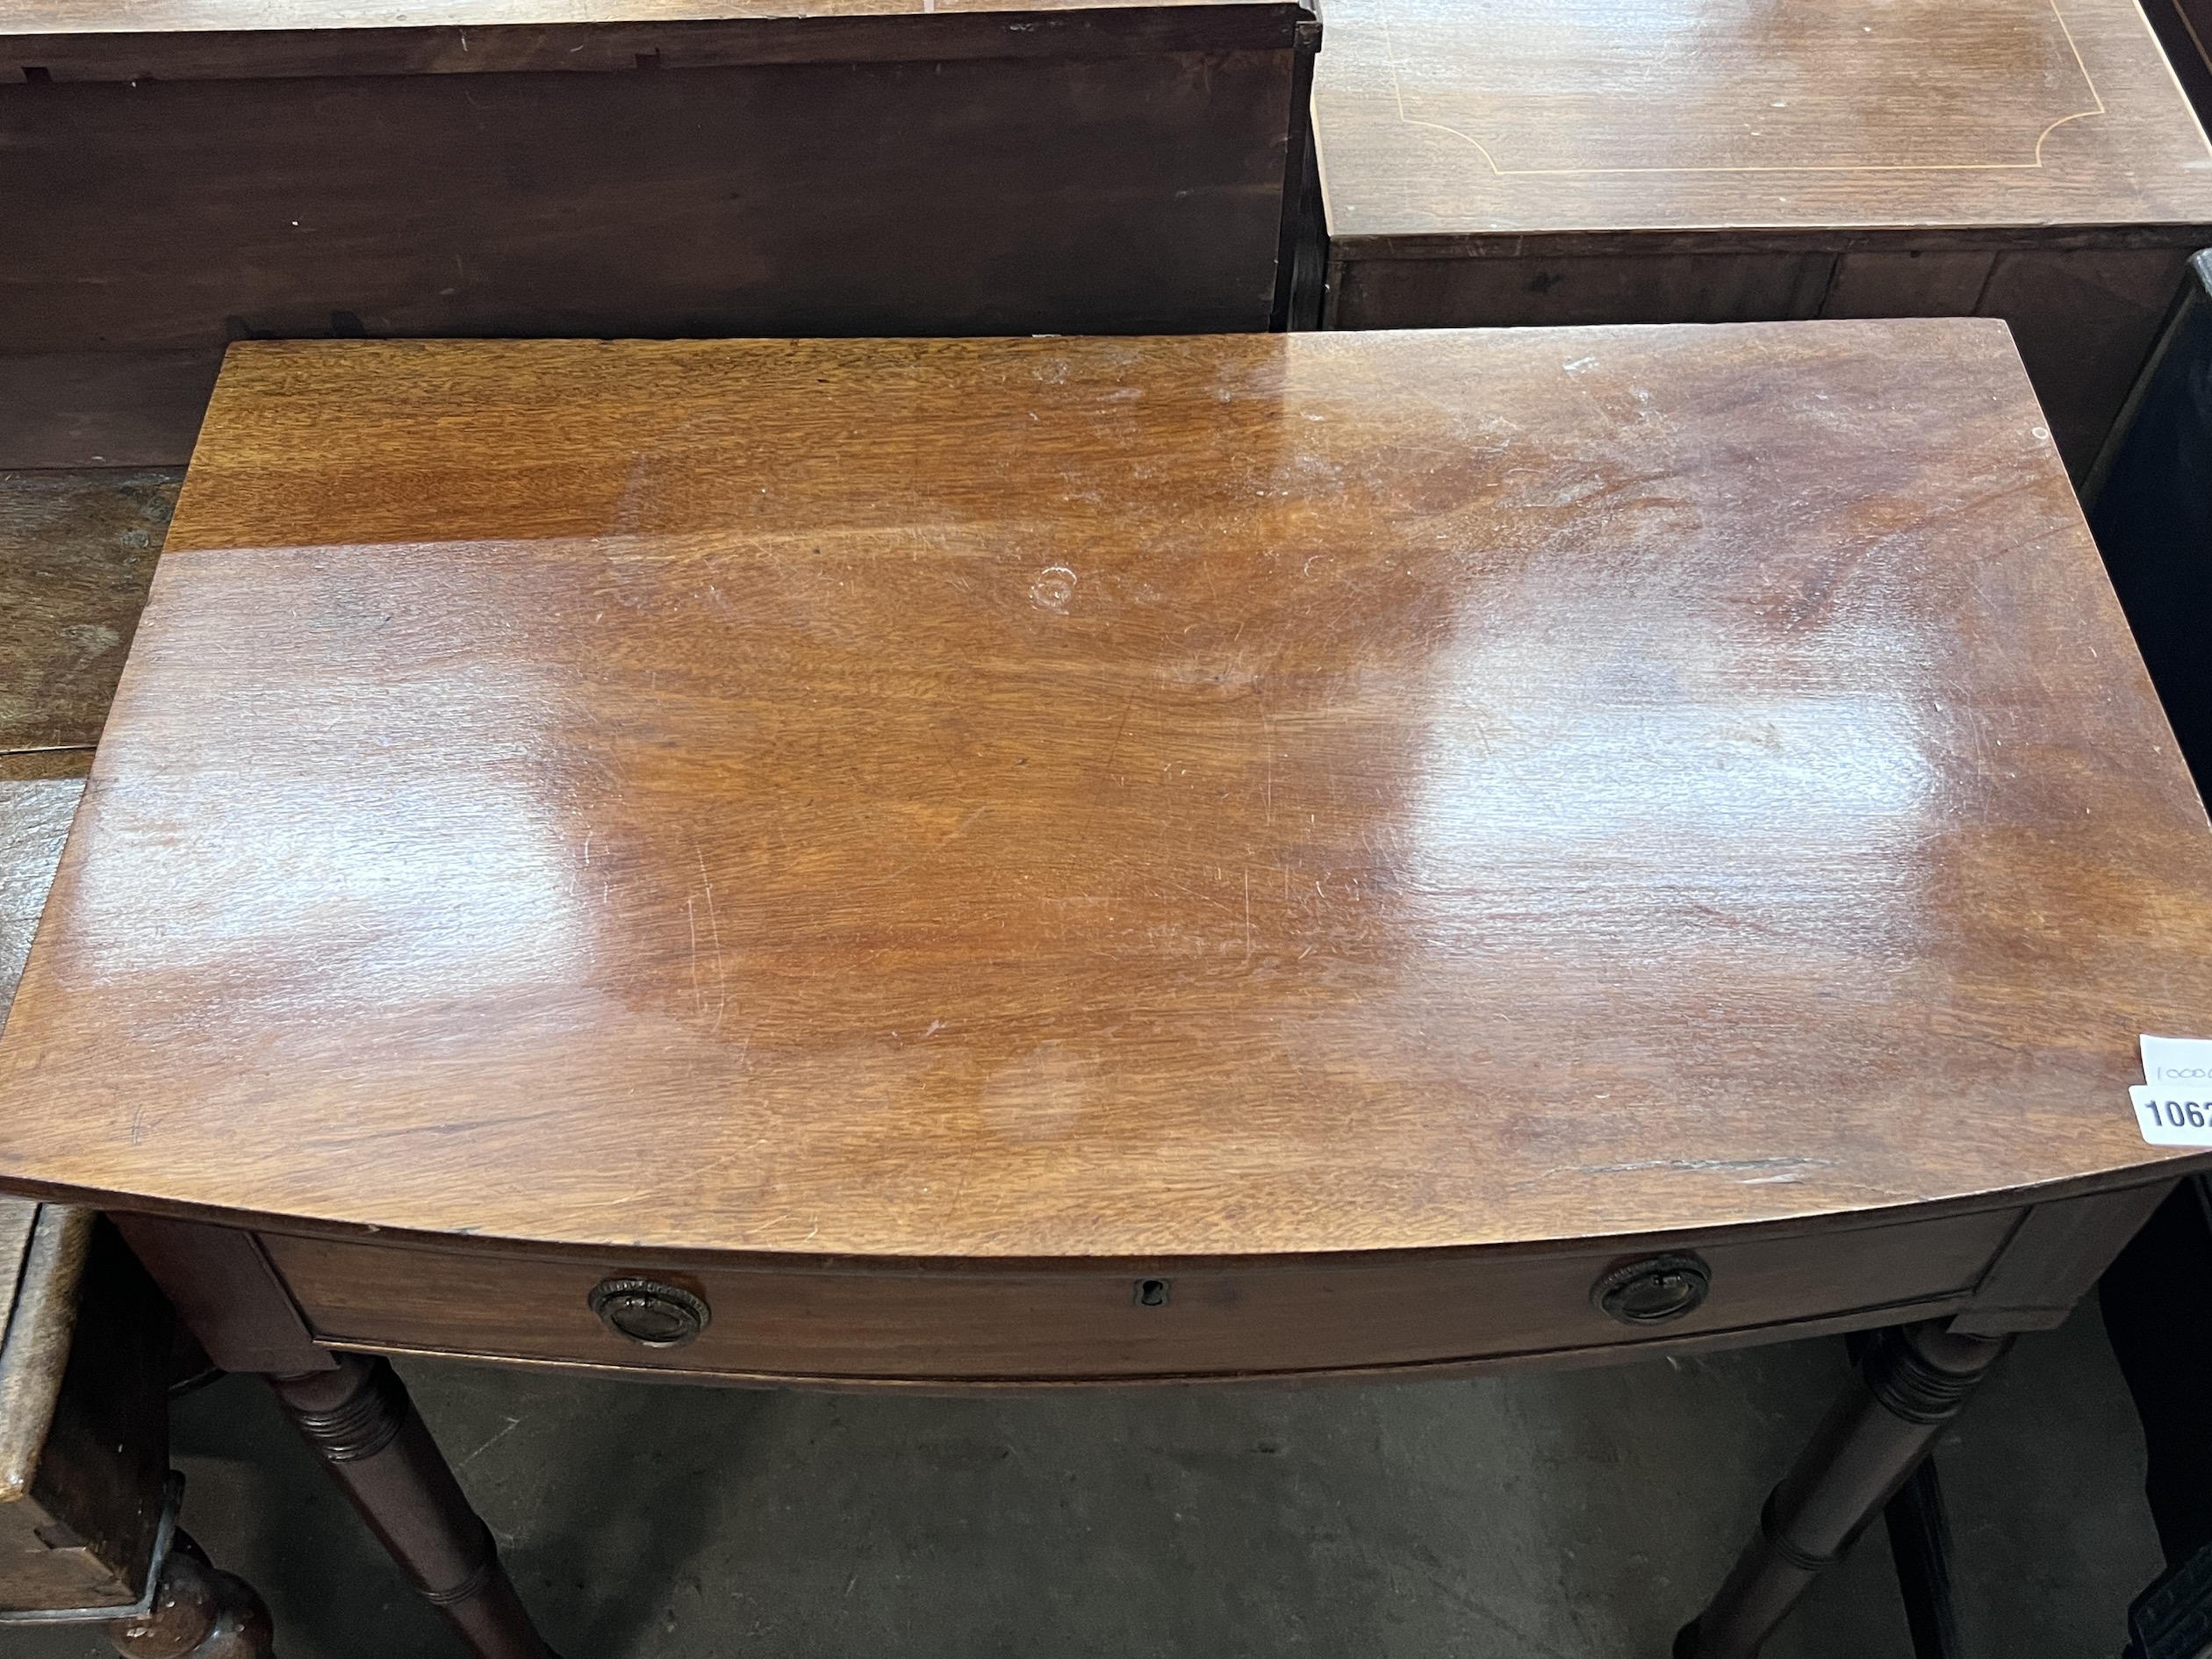 A Regency mahogany bowfront side table, width 79cm, depth 46cm, height 76cm